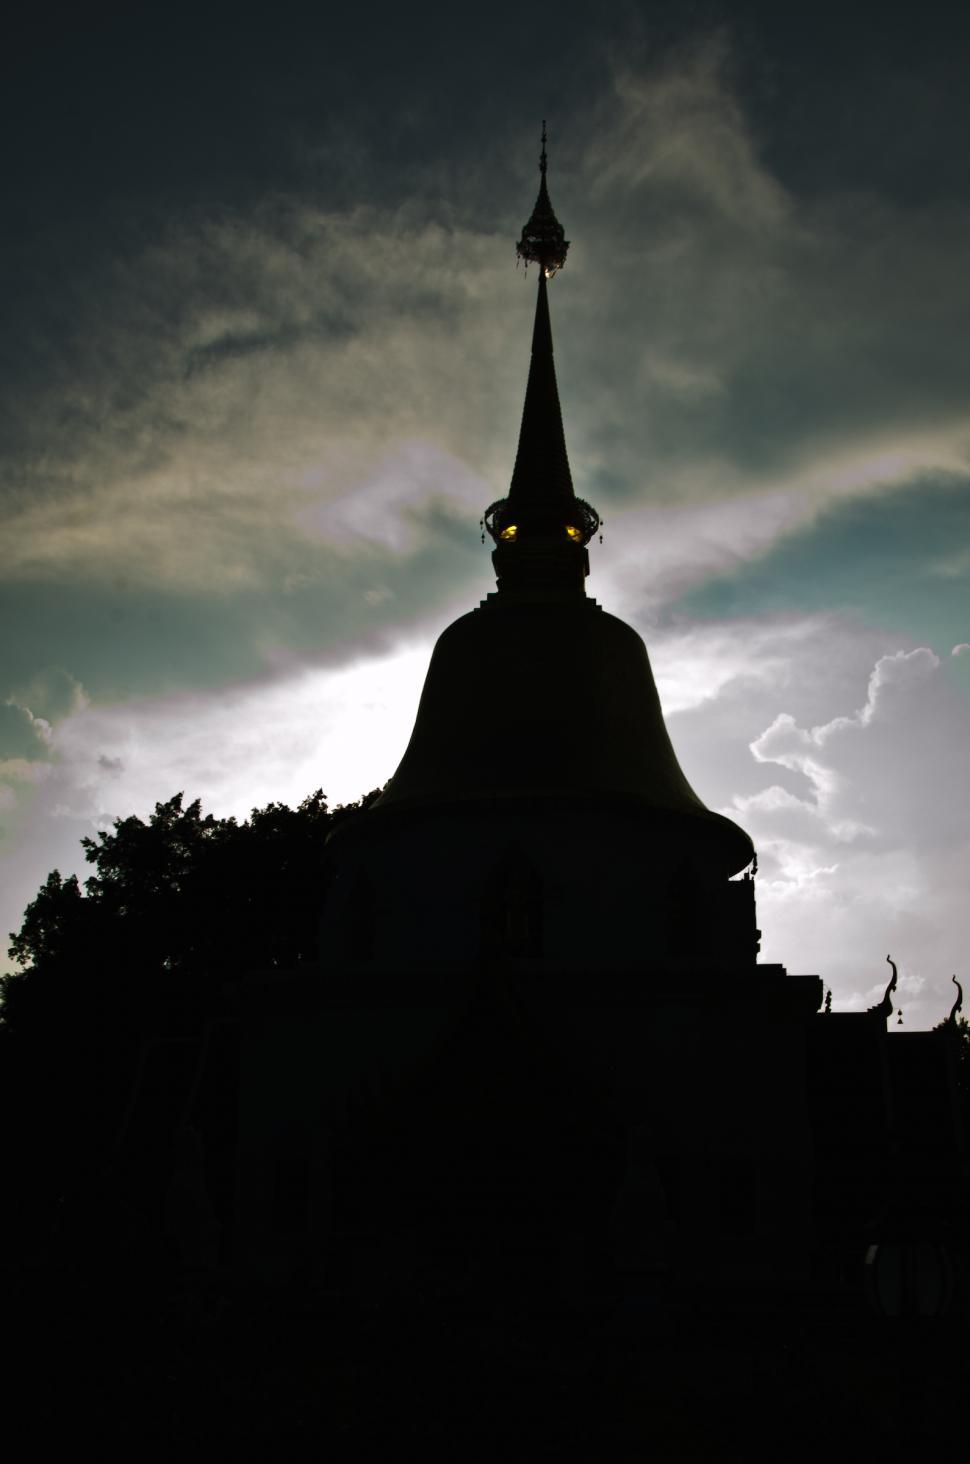 Free Image of Pagoda Silhouette 